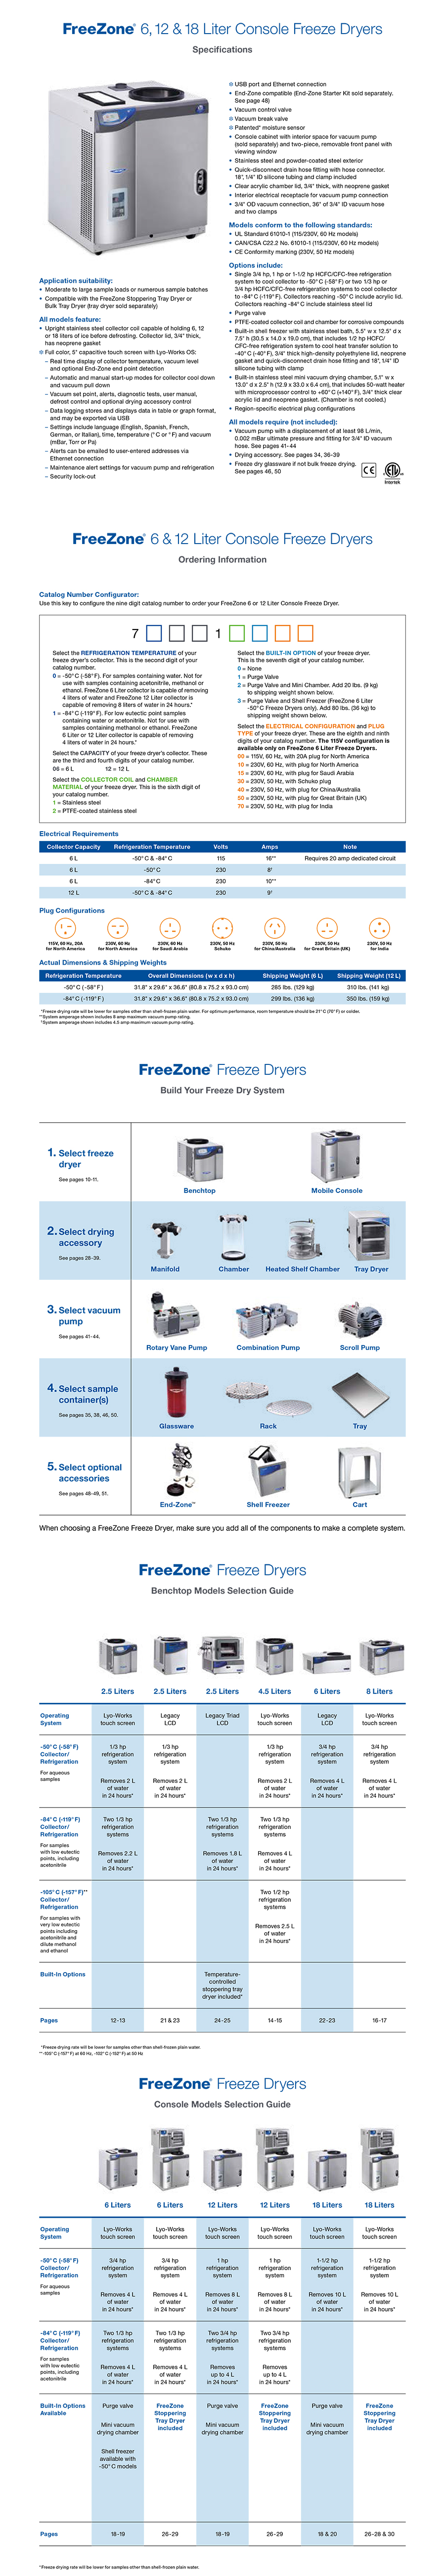 a04 6, 12 & 18 Liter Console Freeze Dryers_01.jpg